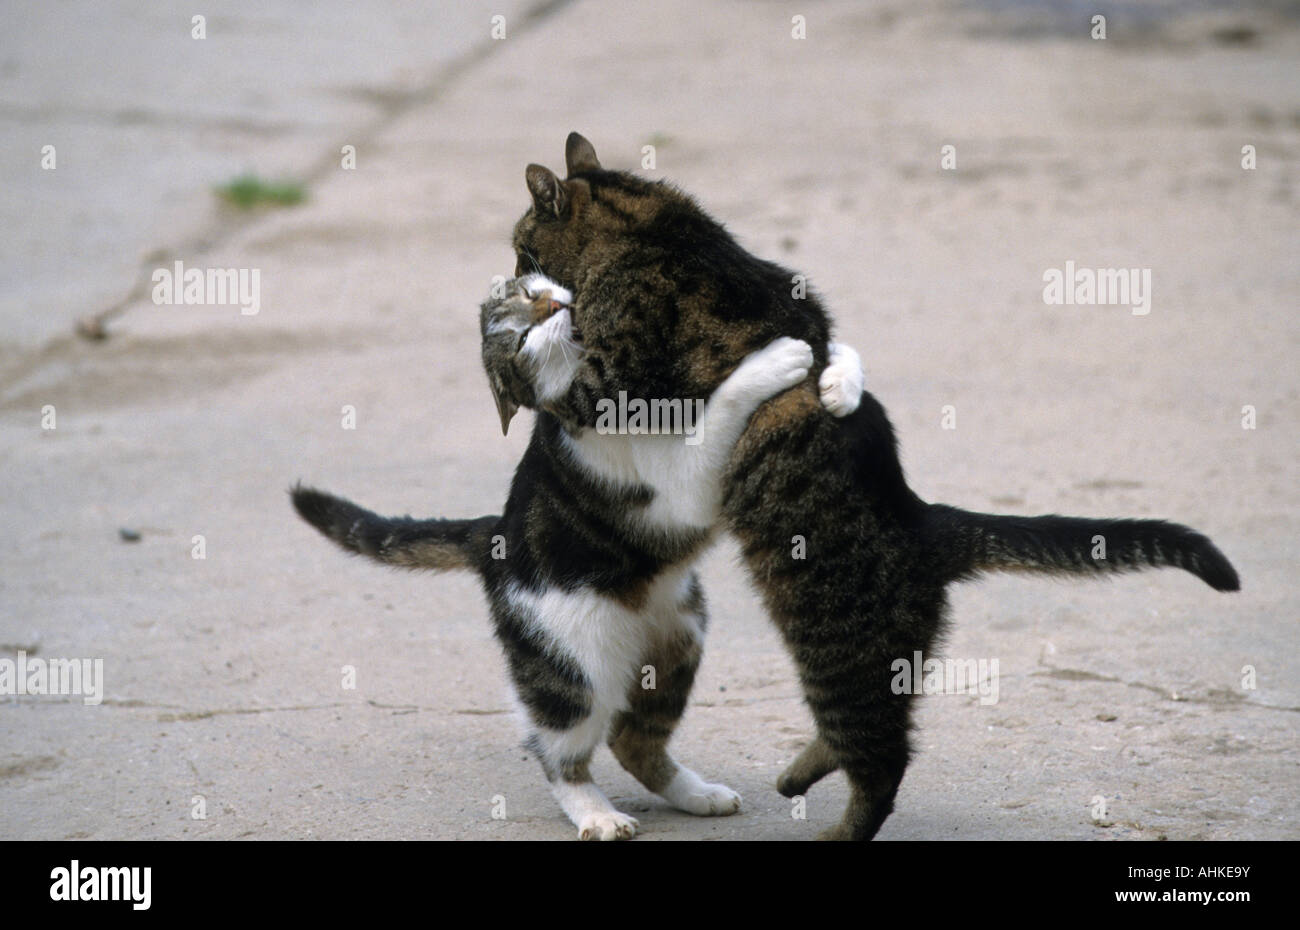 Hauskatzen zwei Kater kämpfend balf domestic cats two male cats fighting scrapping scuffling Stock Photo